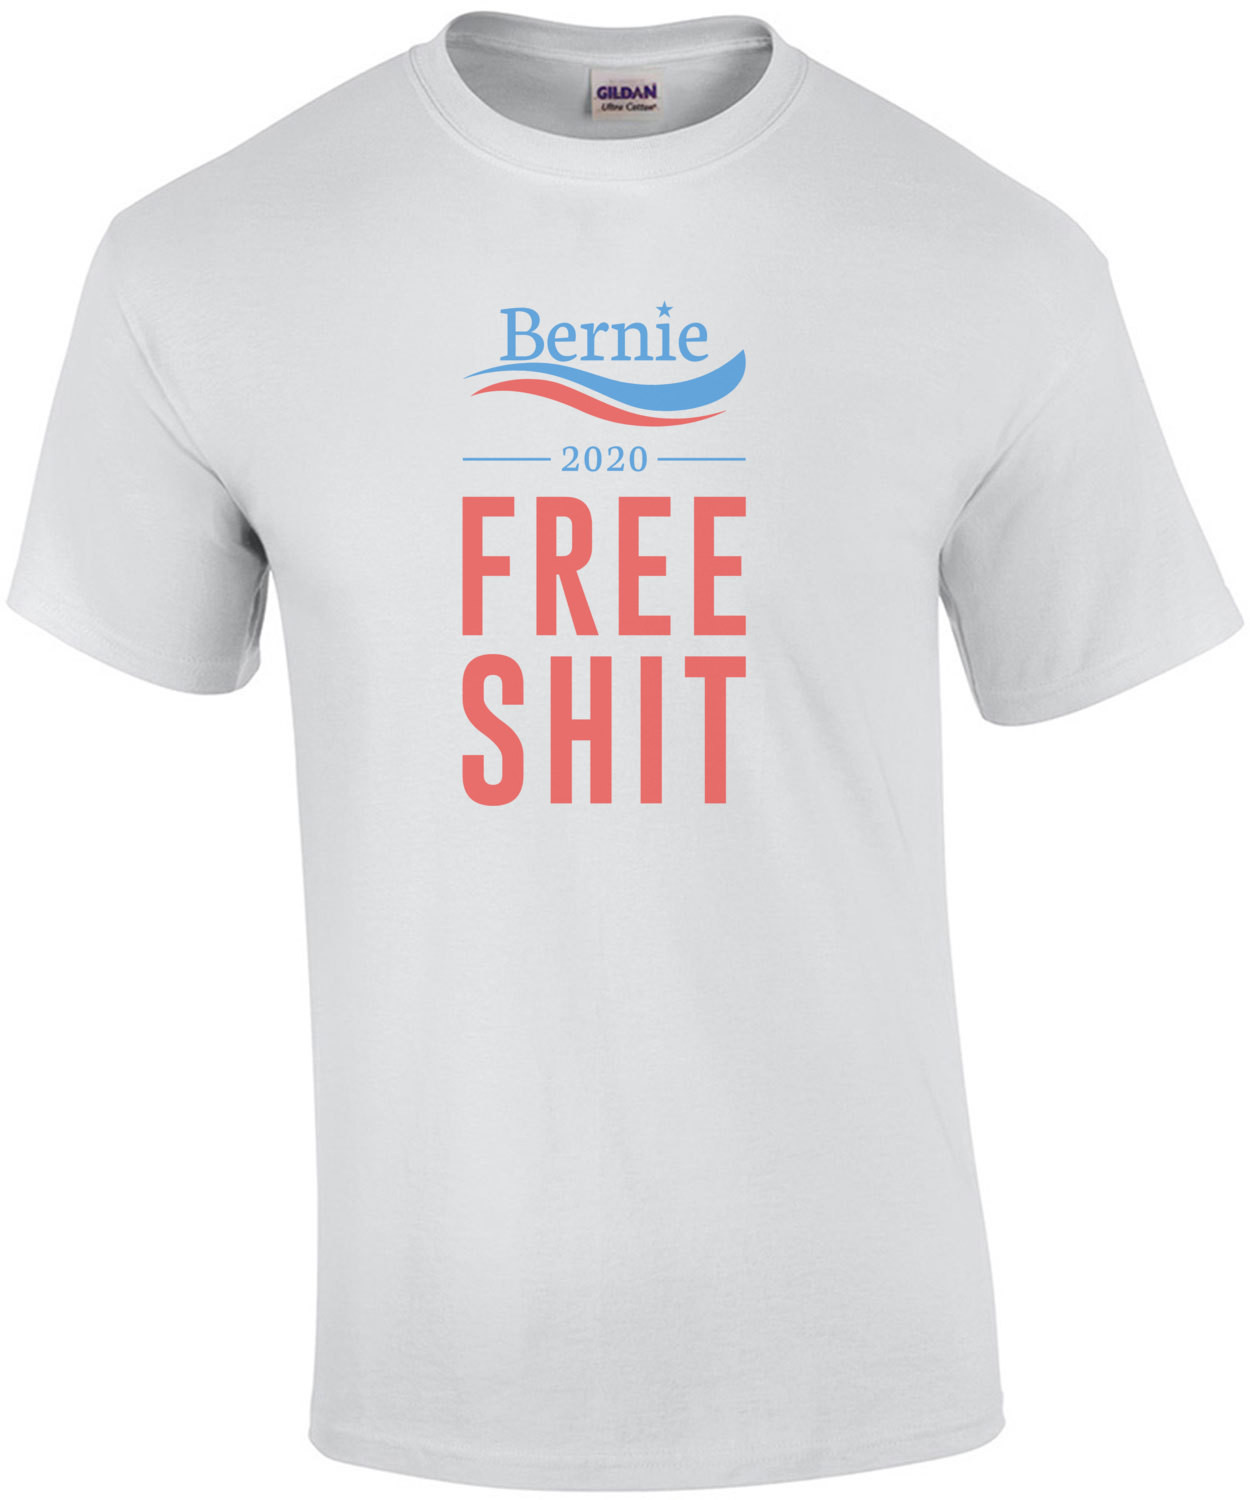 Bernie Sanders 2020 Free Shit - Bernie Sanders T-Shirt